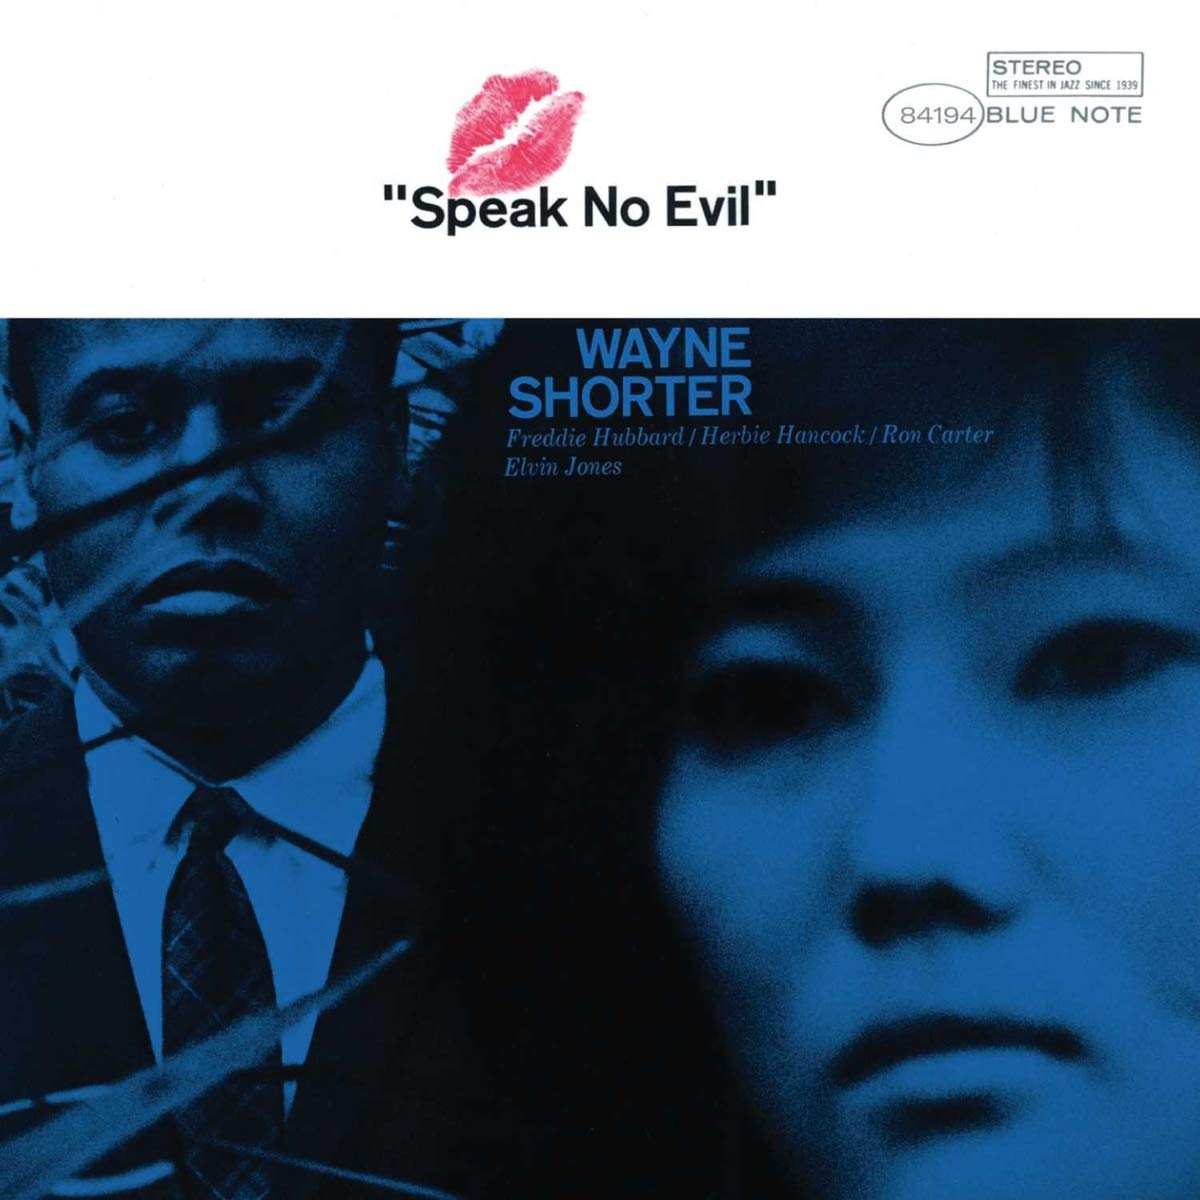 WAYNE SHORTER - SPEAK NO EVIL Vinyl LP